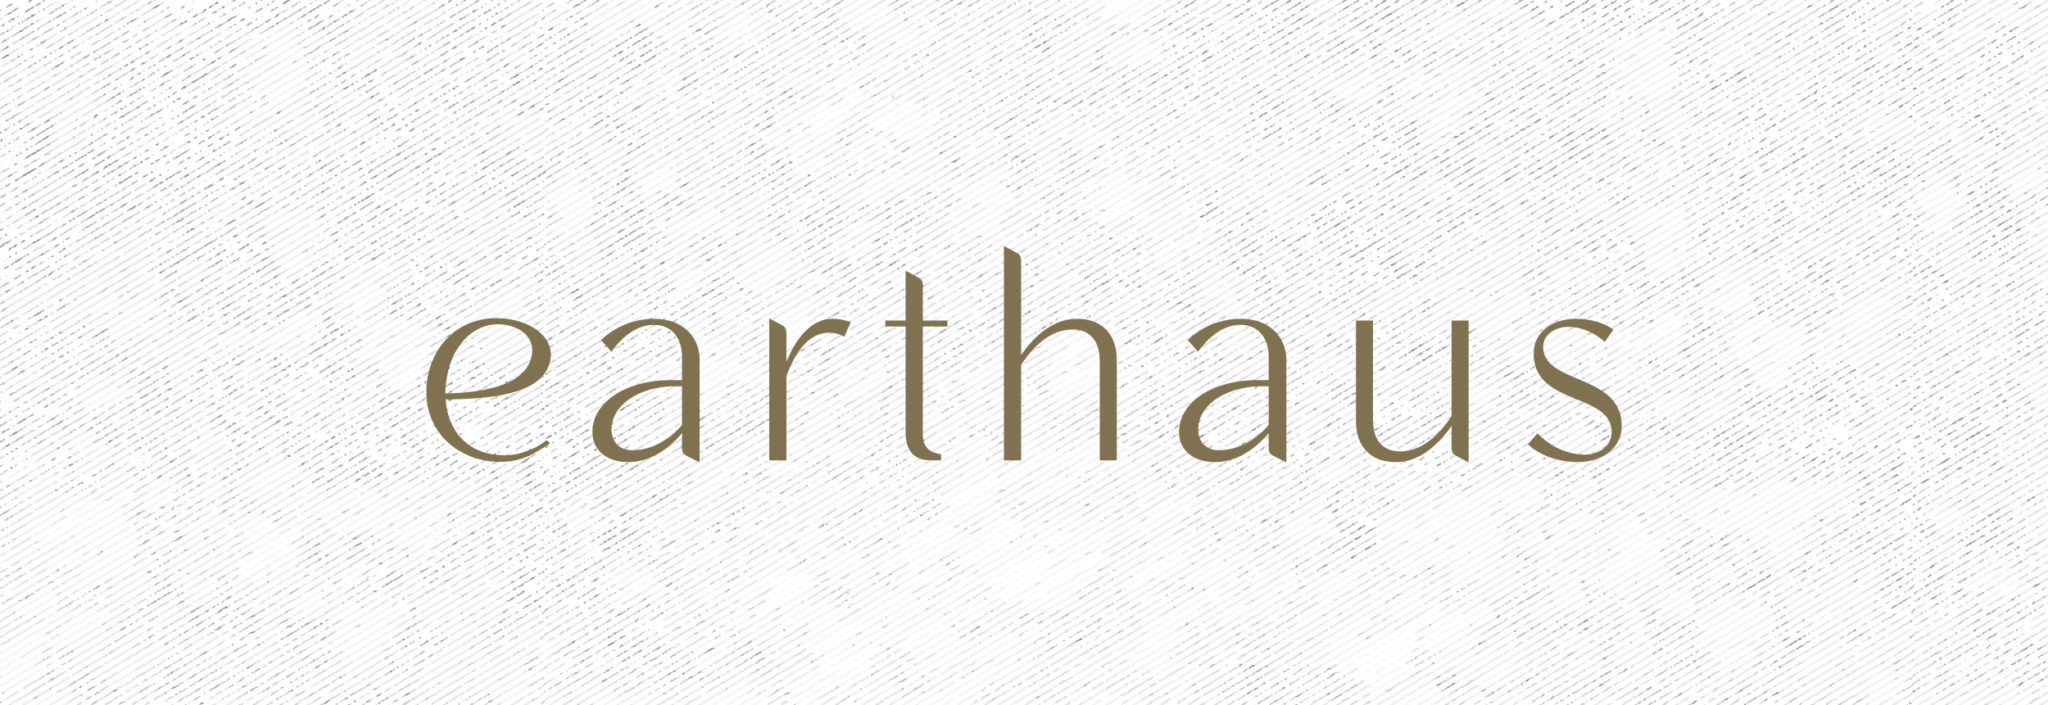 Earthaus brand design, created by Šek Design Studio